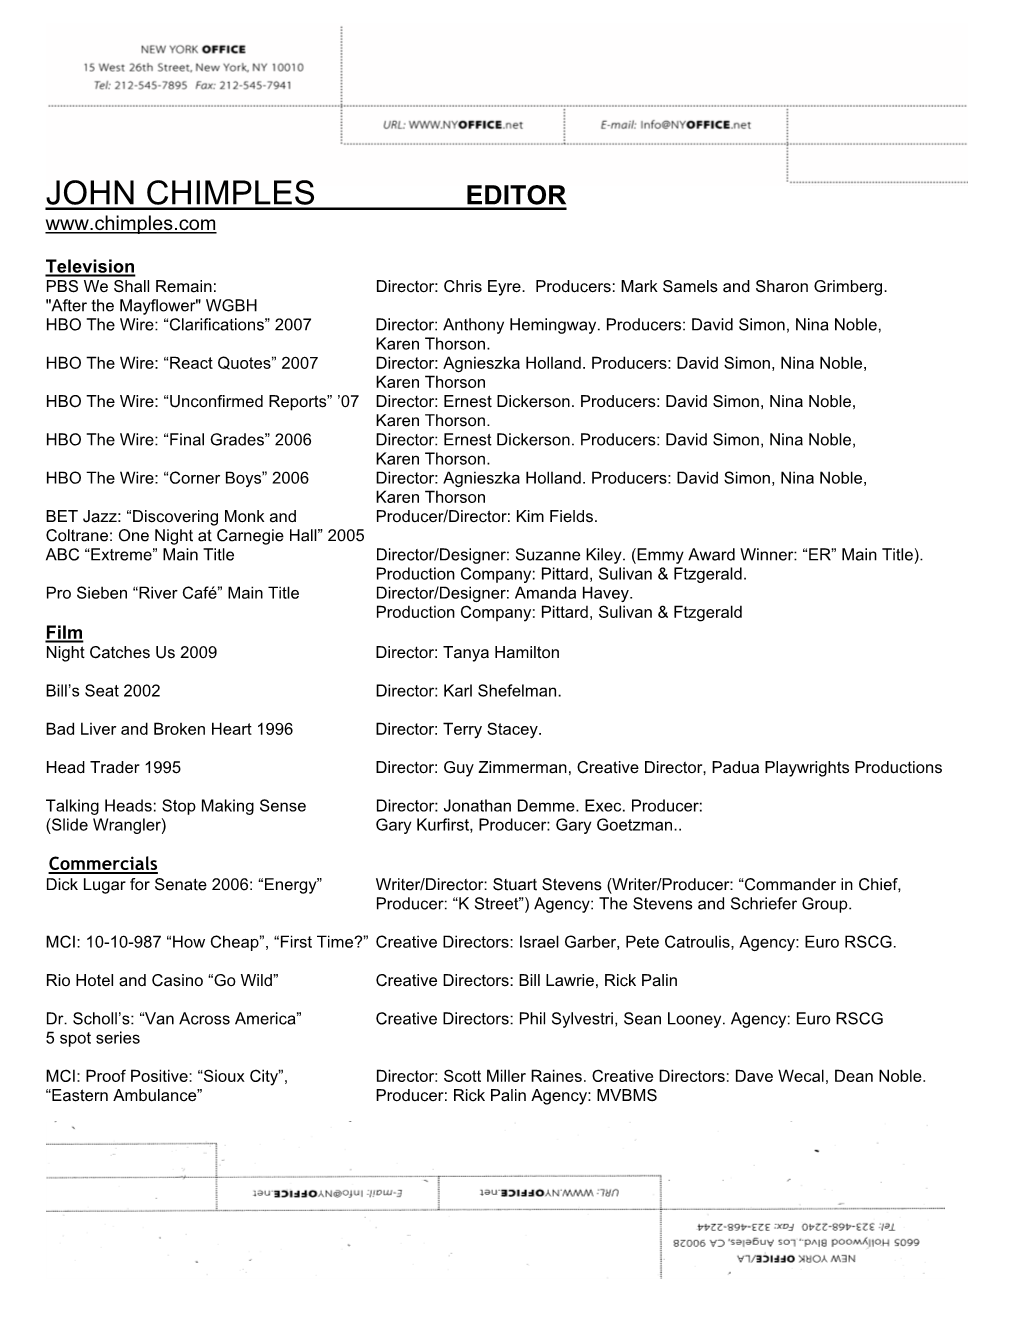 John Chimples Editor